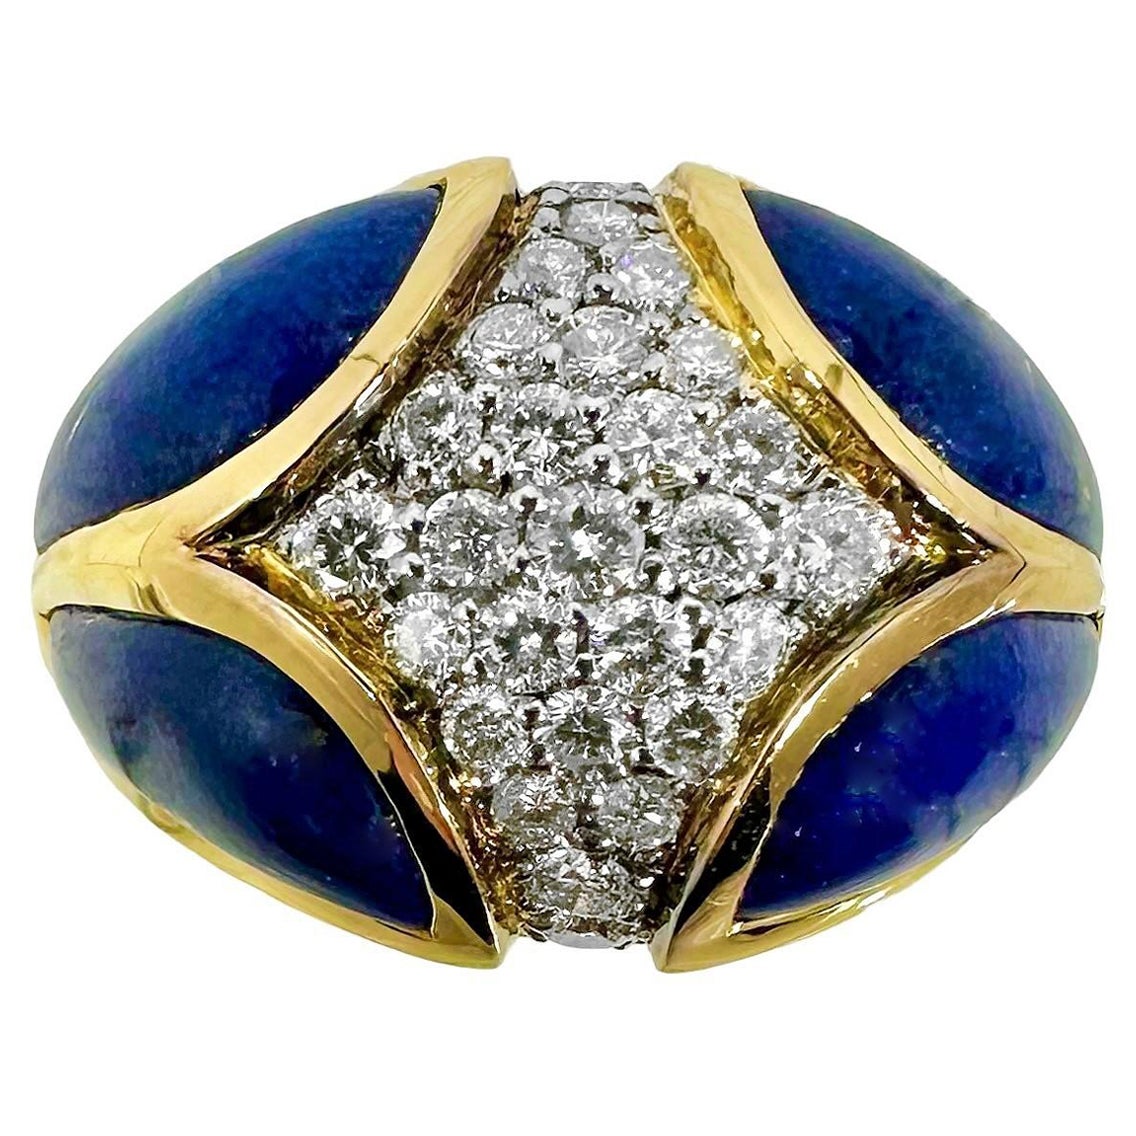 Late-20th Century 18k Yellow Gold, Lapis-Lazuli and Diamond Fashion Ring